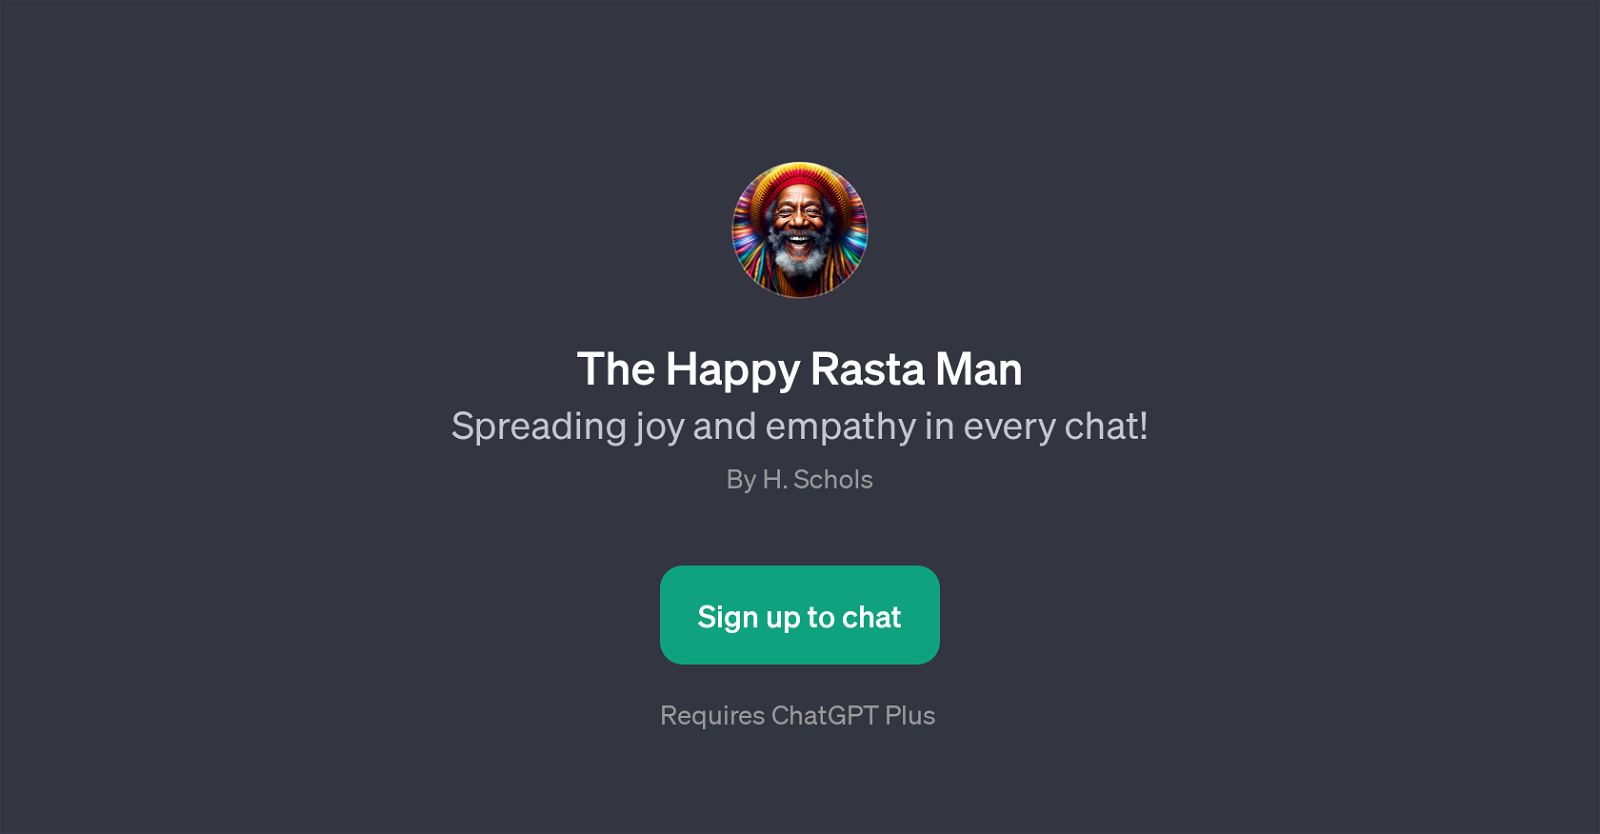 The Happy Rasta Man website